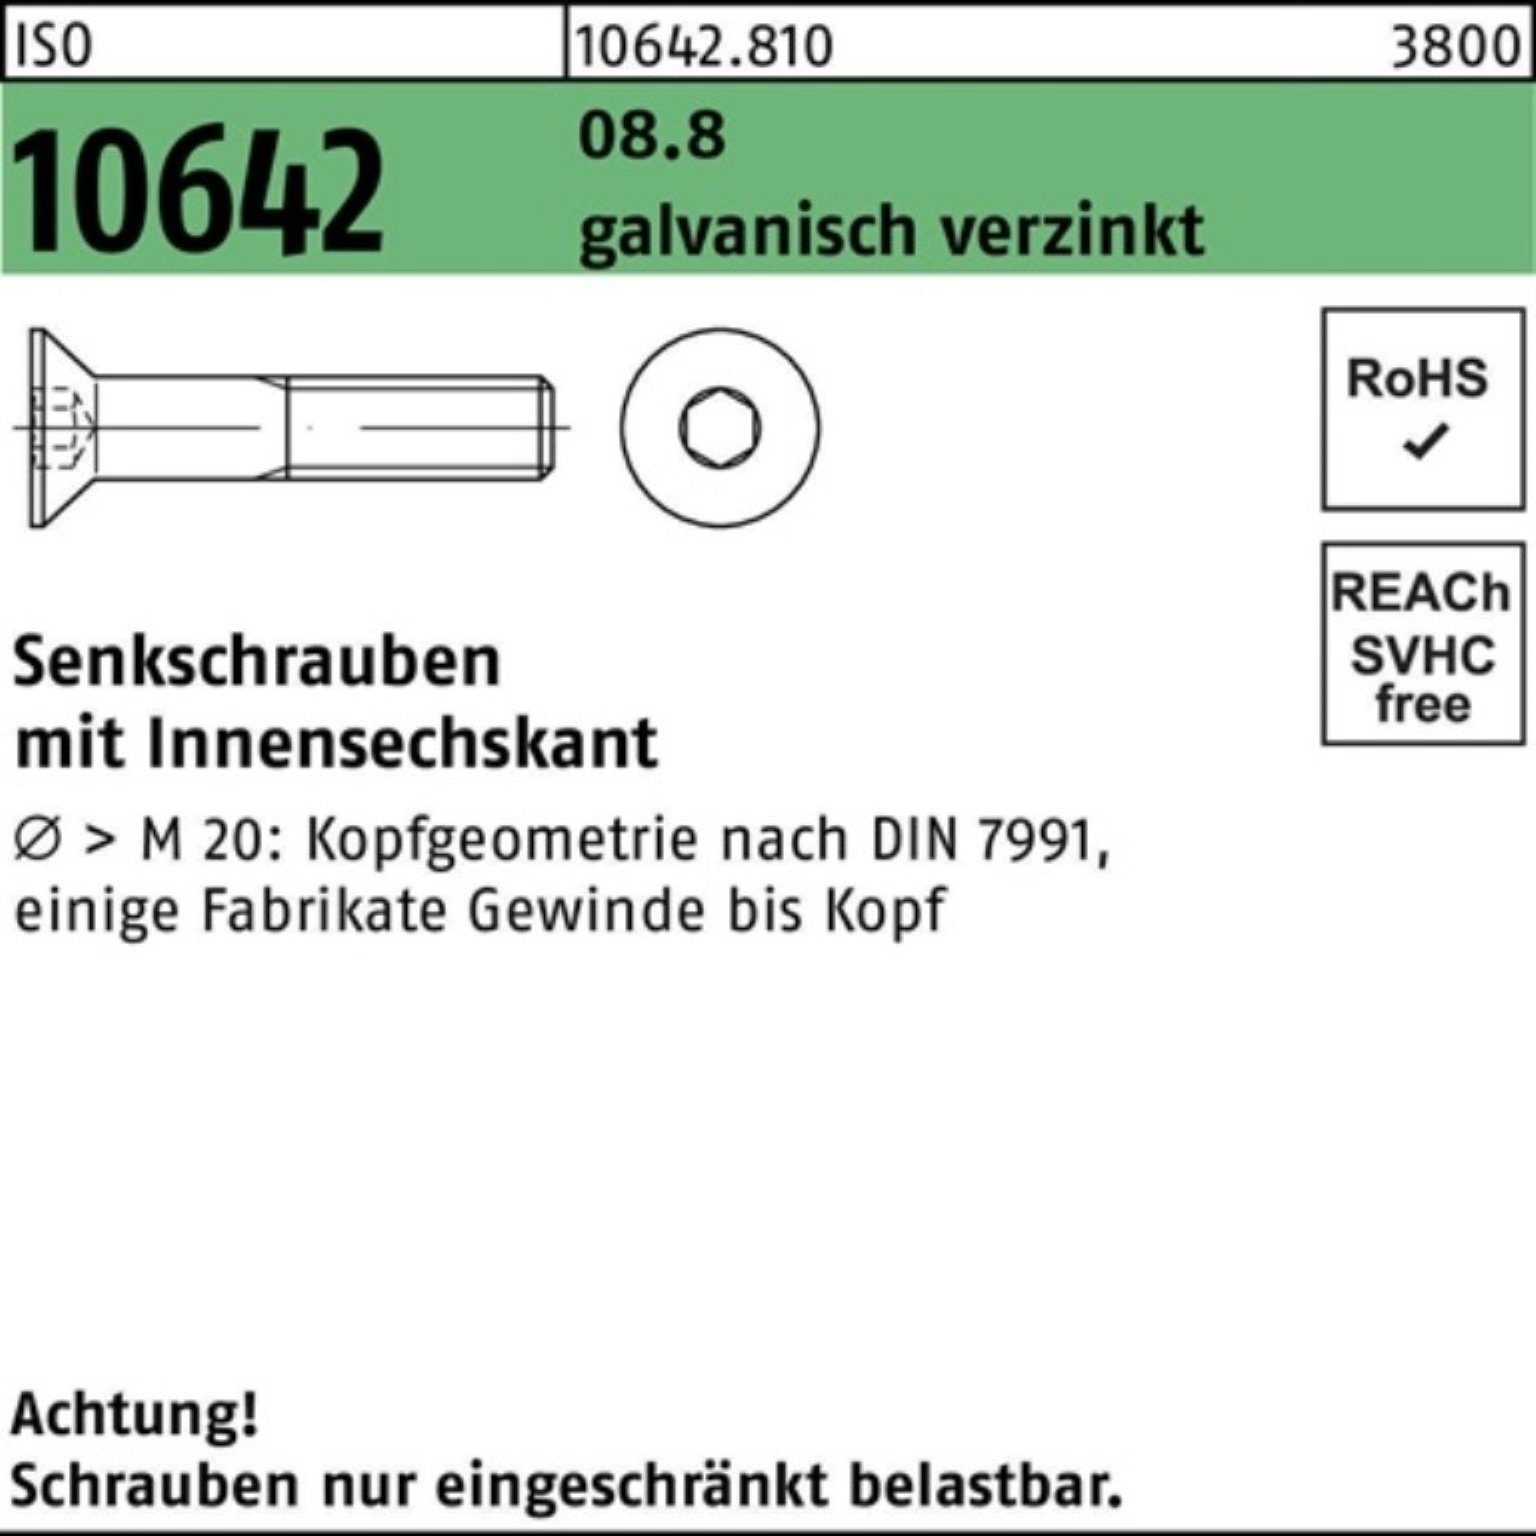 Reyher Senkschraube 200er 60 Senkschraube galv.verz. Pack 10642 ISO Innen-6kt 200 8.8 M6x